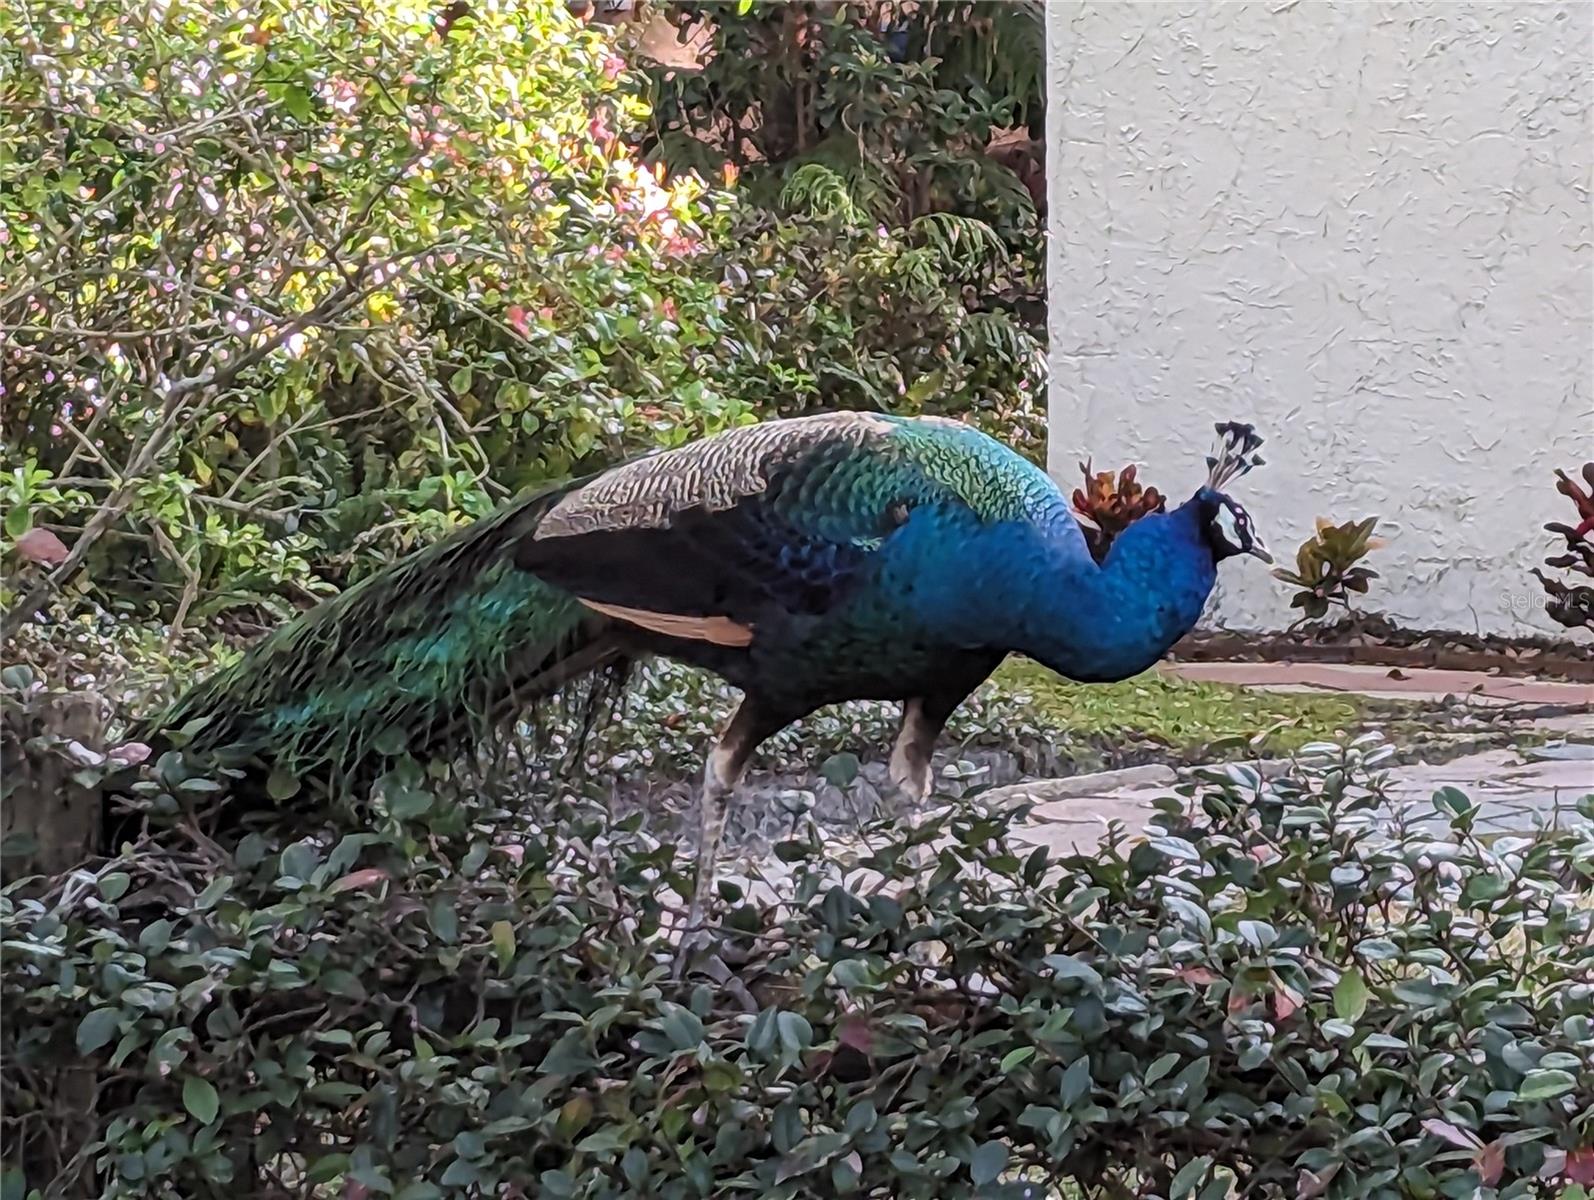 Peacocks roam the area